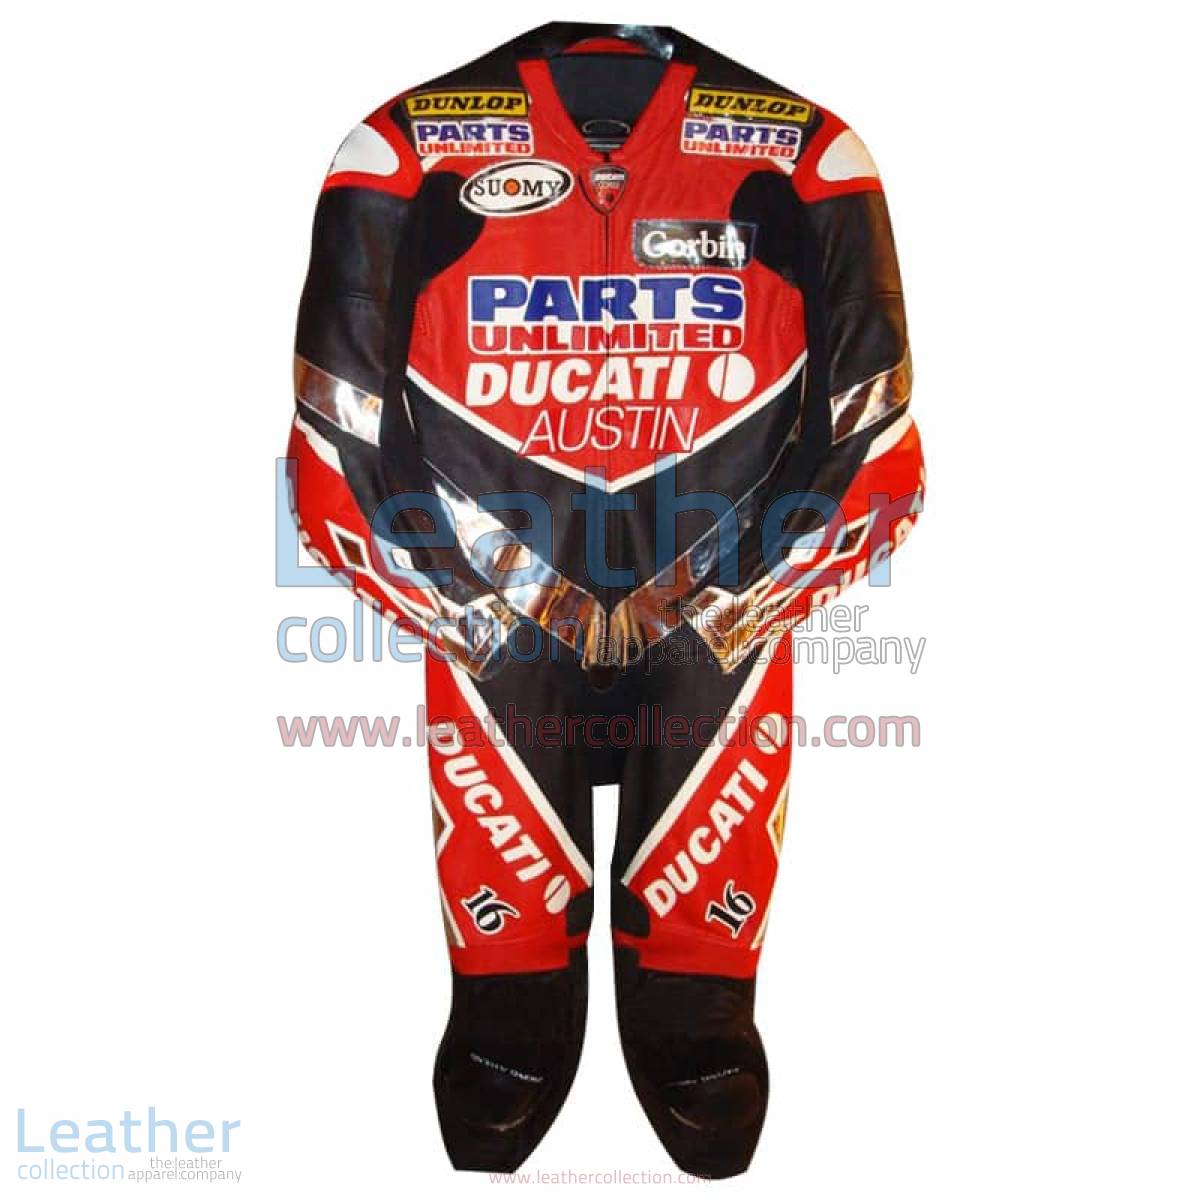 Anthony Gobert Austin Ducati 2003 AMA Race Suit | race suit,ducati race suit